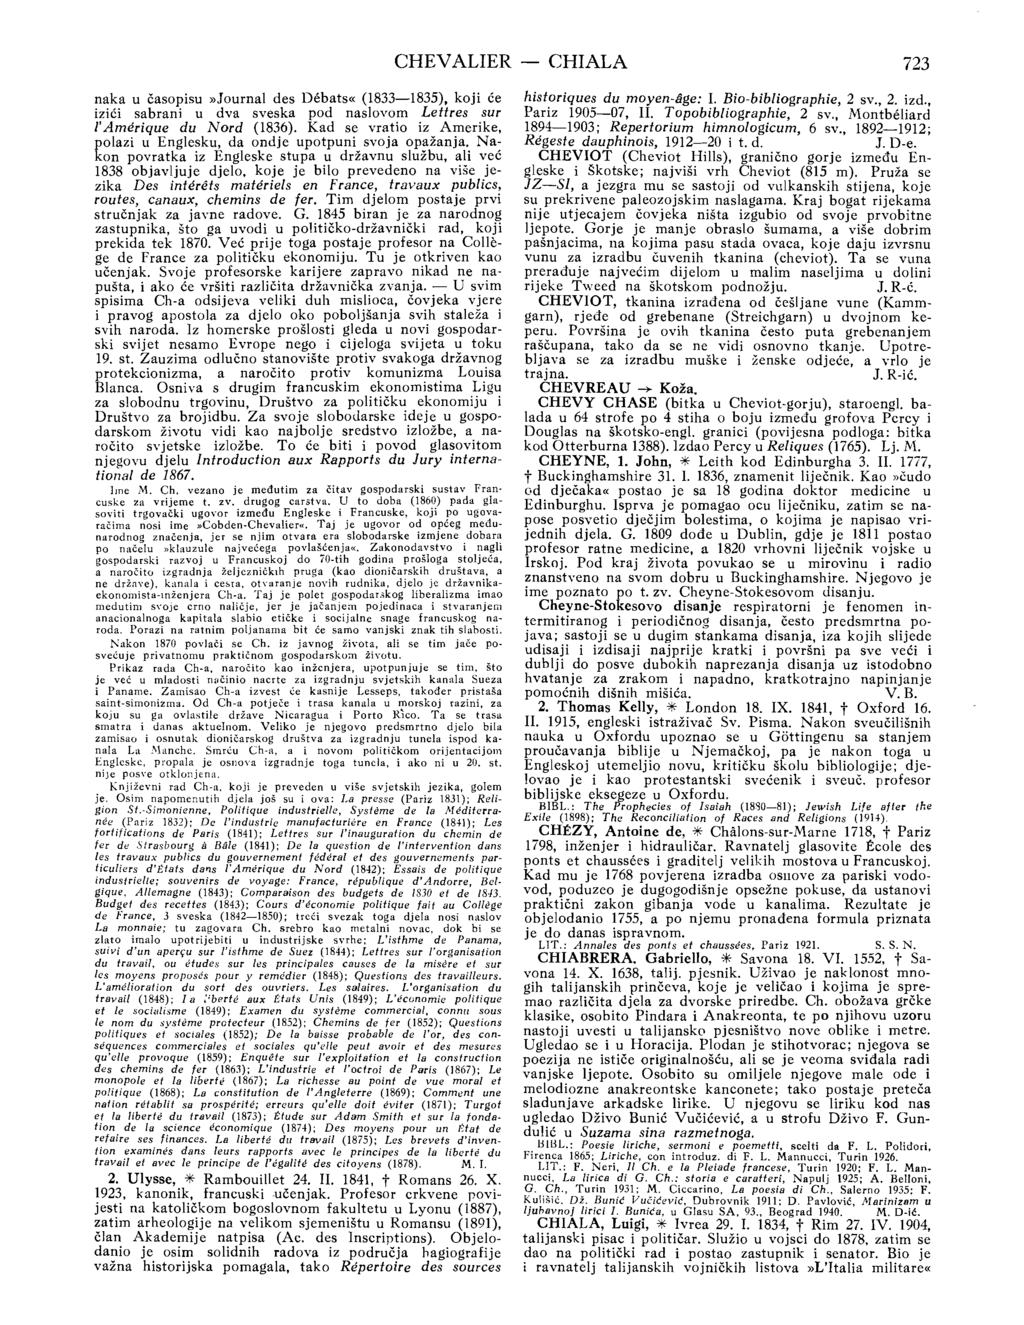 CHEVALIER - CHIALA 723 naka u časopisu»journal des Debats«(1833-1835), koji će izići sabrani u dva sveska pod naslovom Lettres sur I'Amerique du Nord (1836).